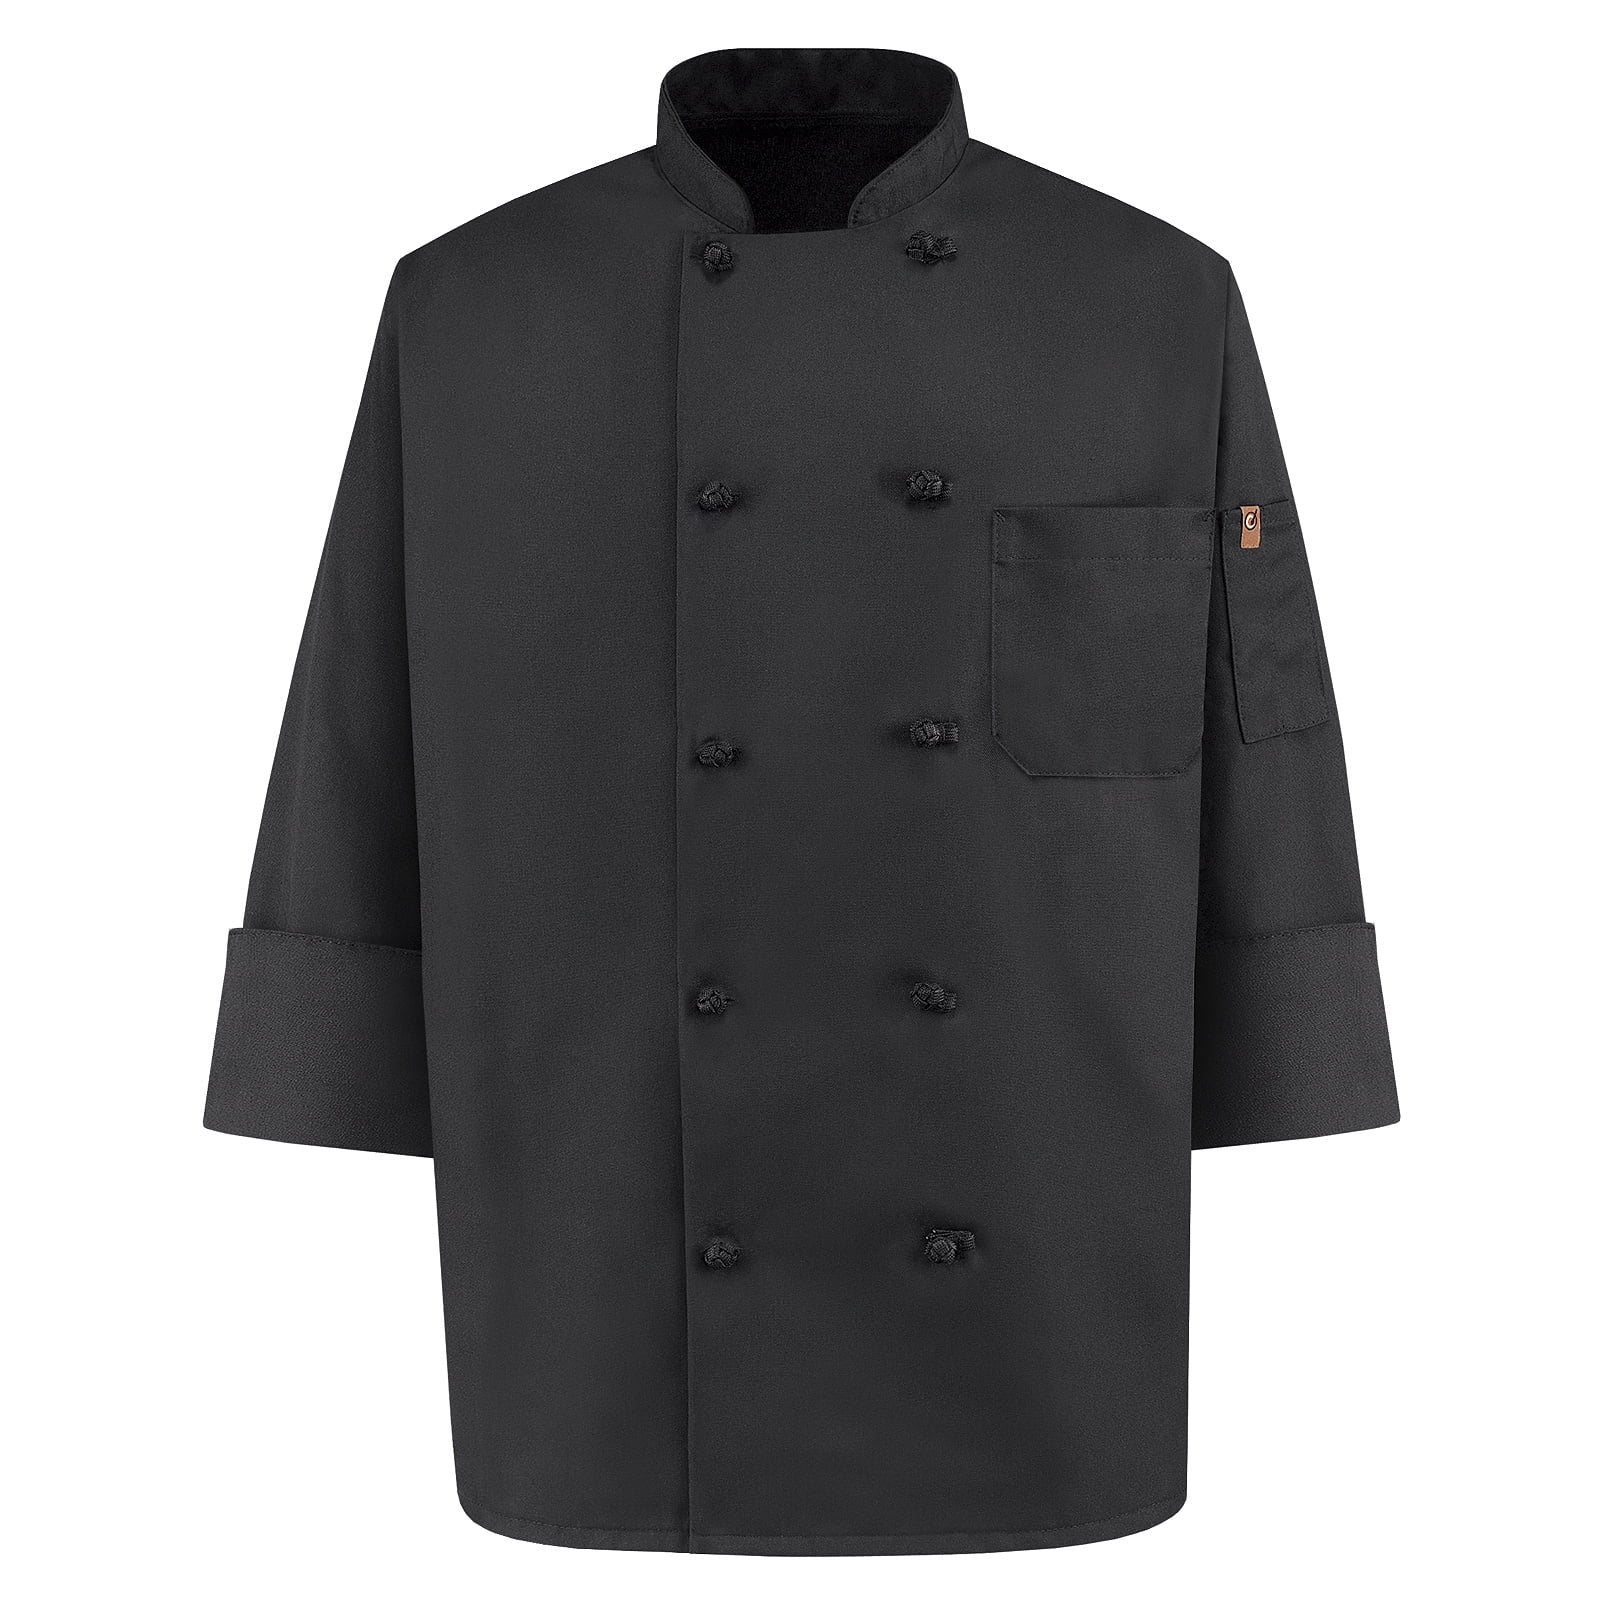 Adults Kitchen Cooking Work Wear Jacket PR652 Premier Chef's Jacket Studs 